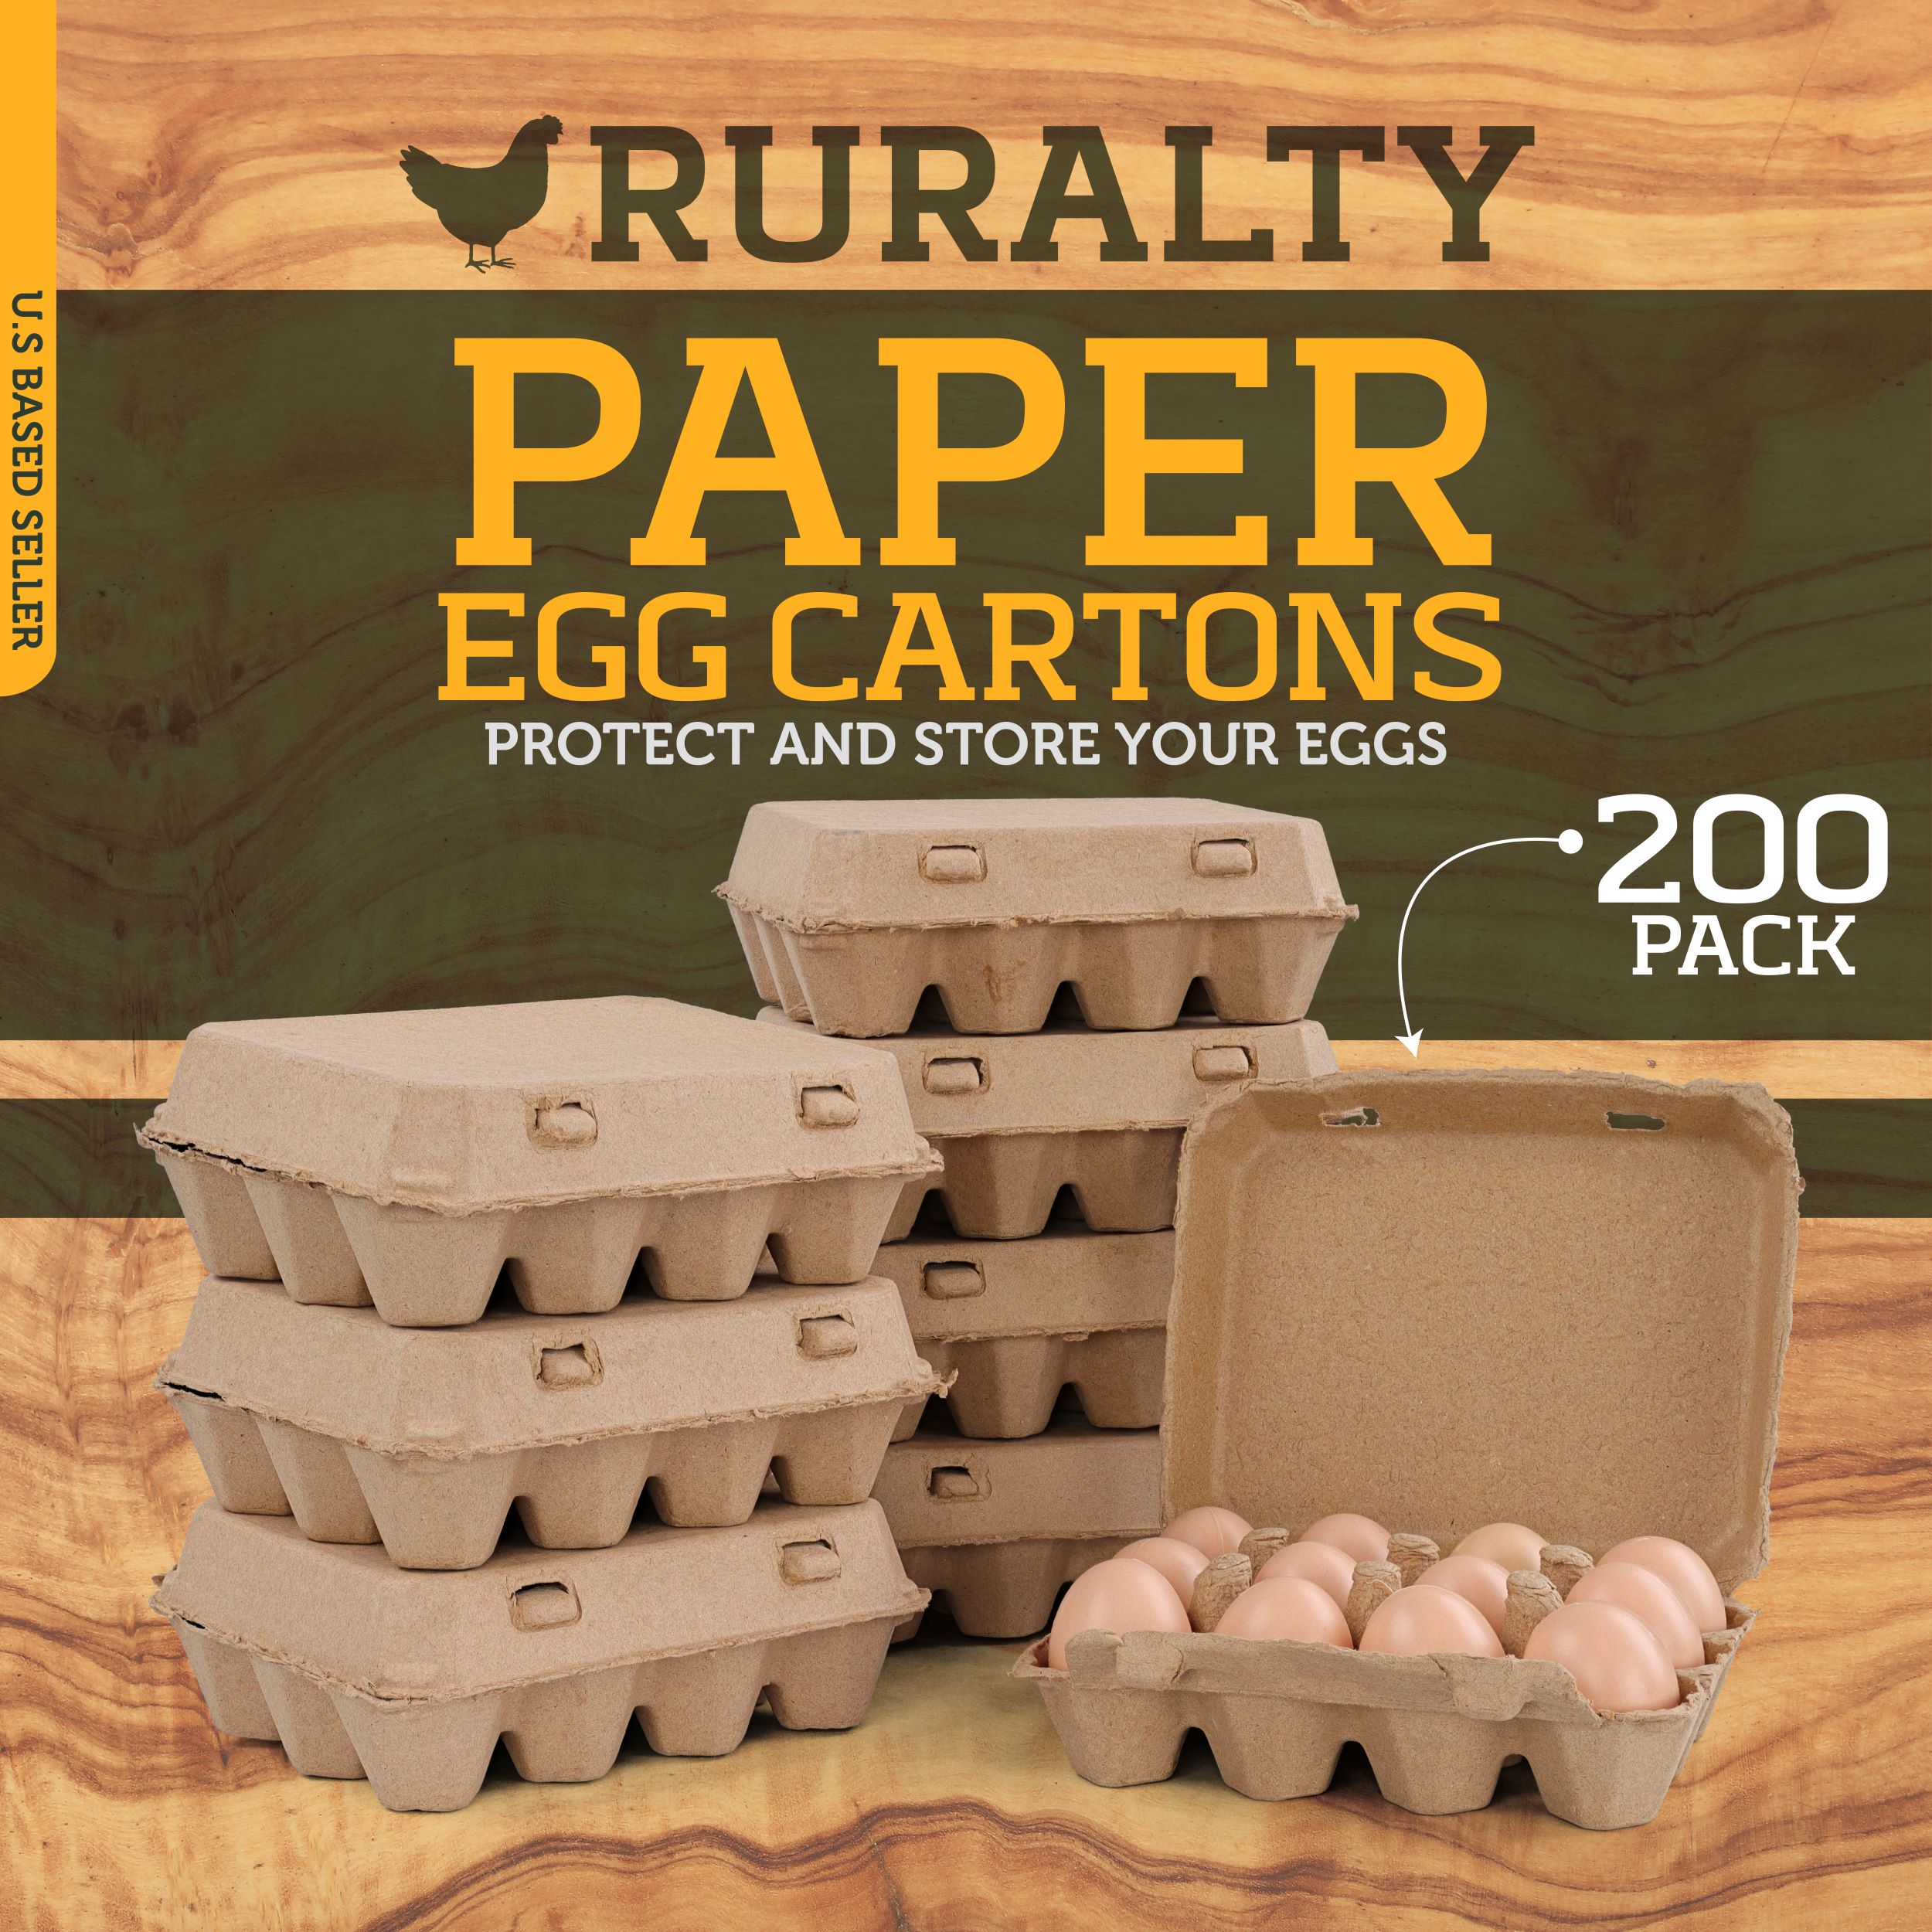 Ruralty Recycled Cardboard Egg Cartons 200ct Dozen 4x3 Vintage Bulk Egg Cartons - image 2 of 7